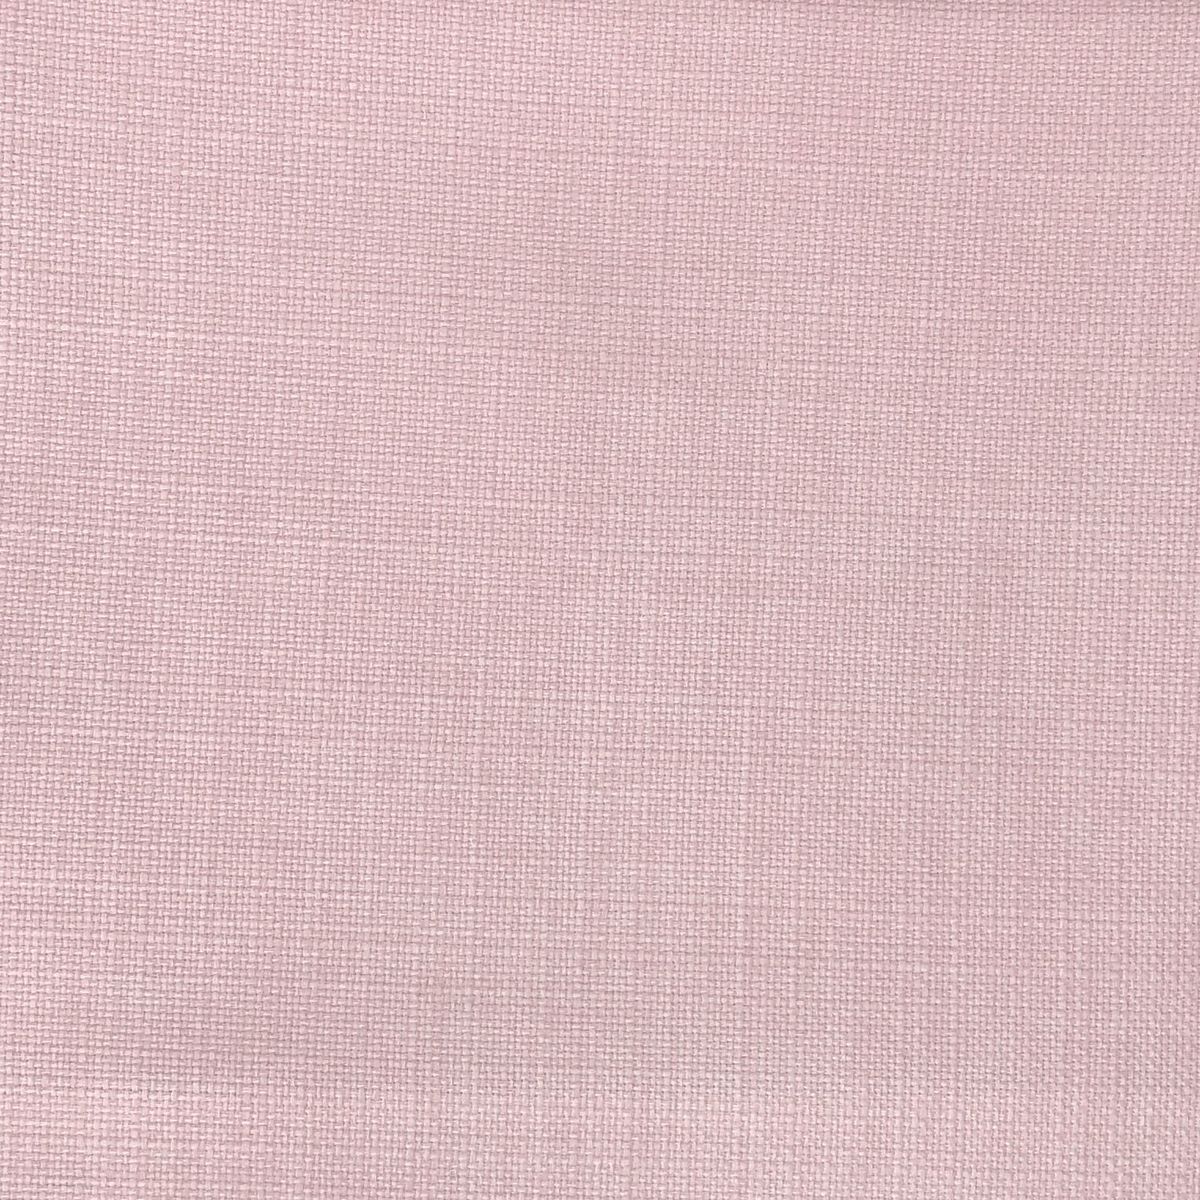 Linoso Pink Fabric by Chatham Glyn